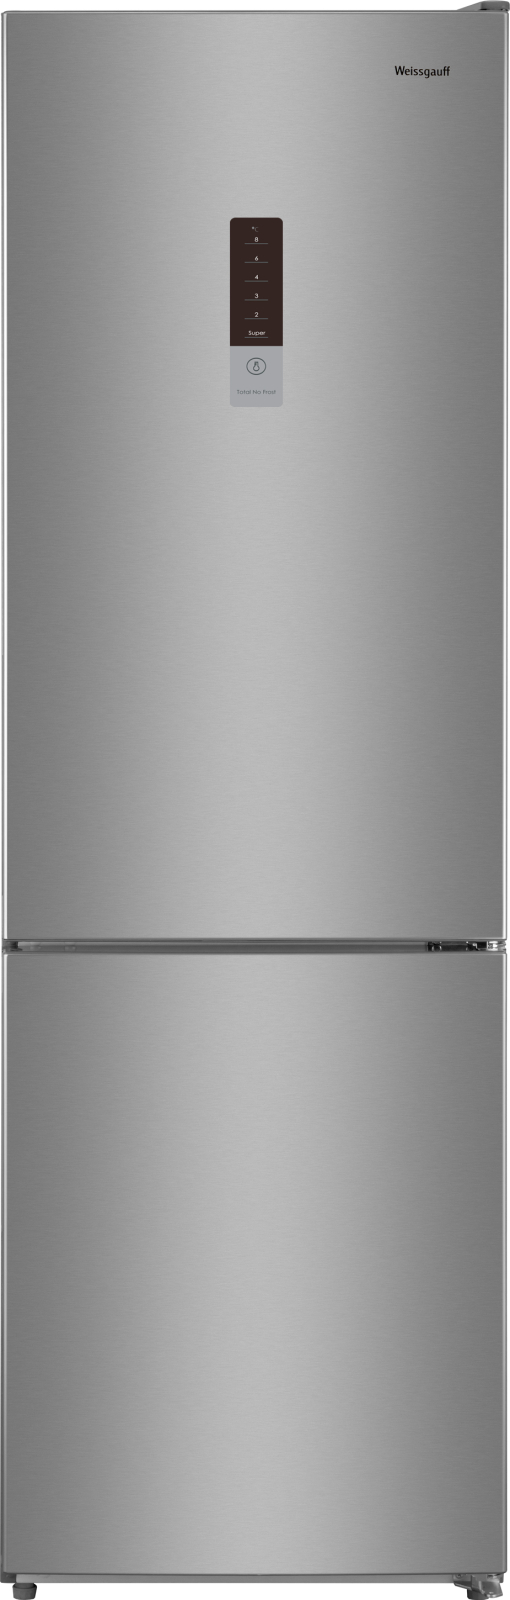 Холодильник Weissgauff WRK 190 DX серебристый холодильник weissgauff wrk 185 total nofrost inverter inox серебристый